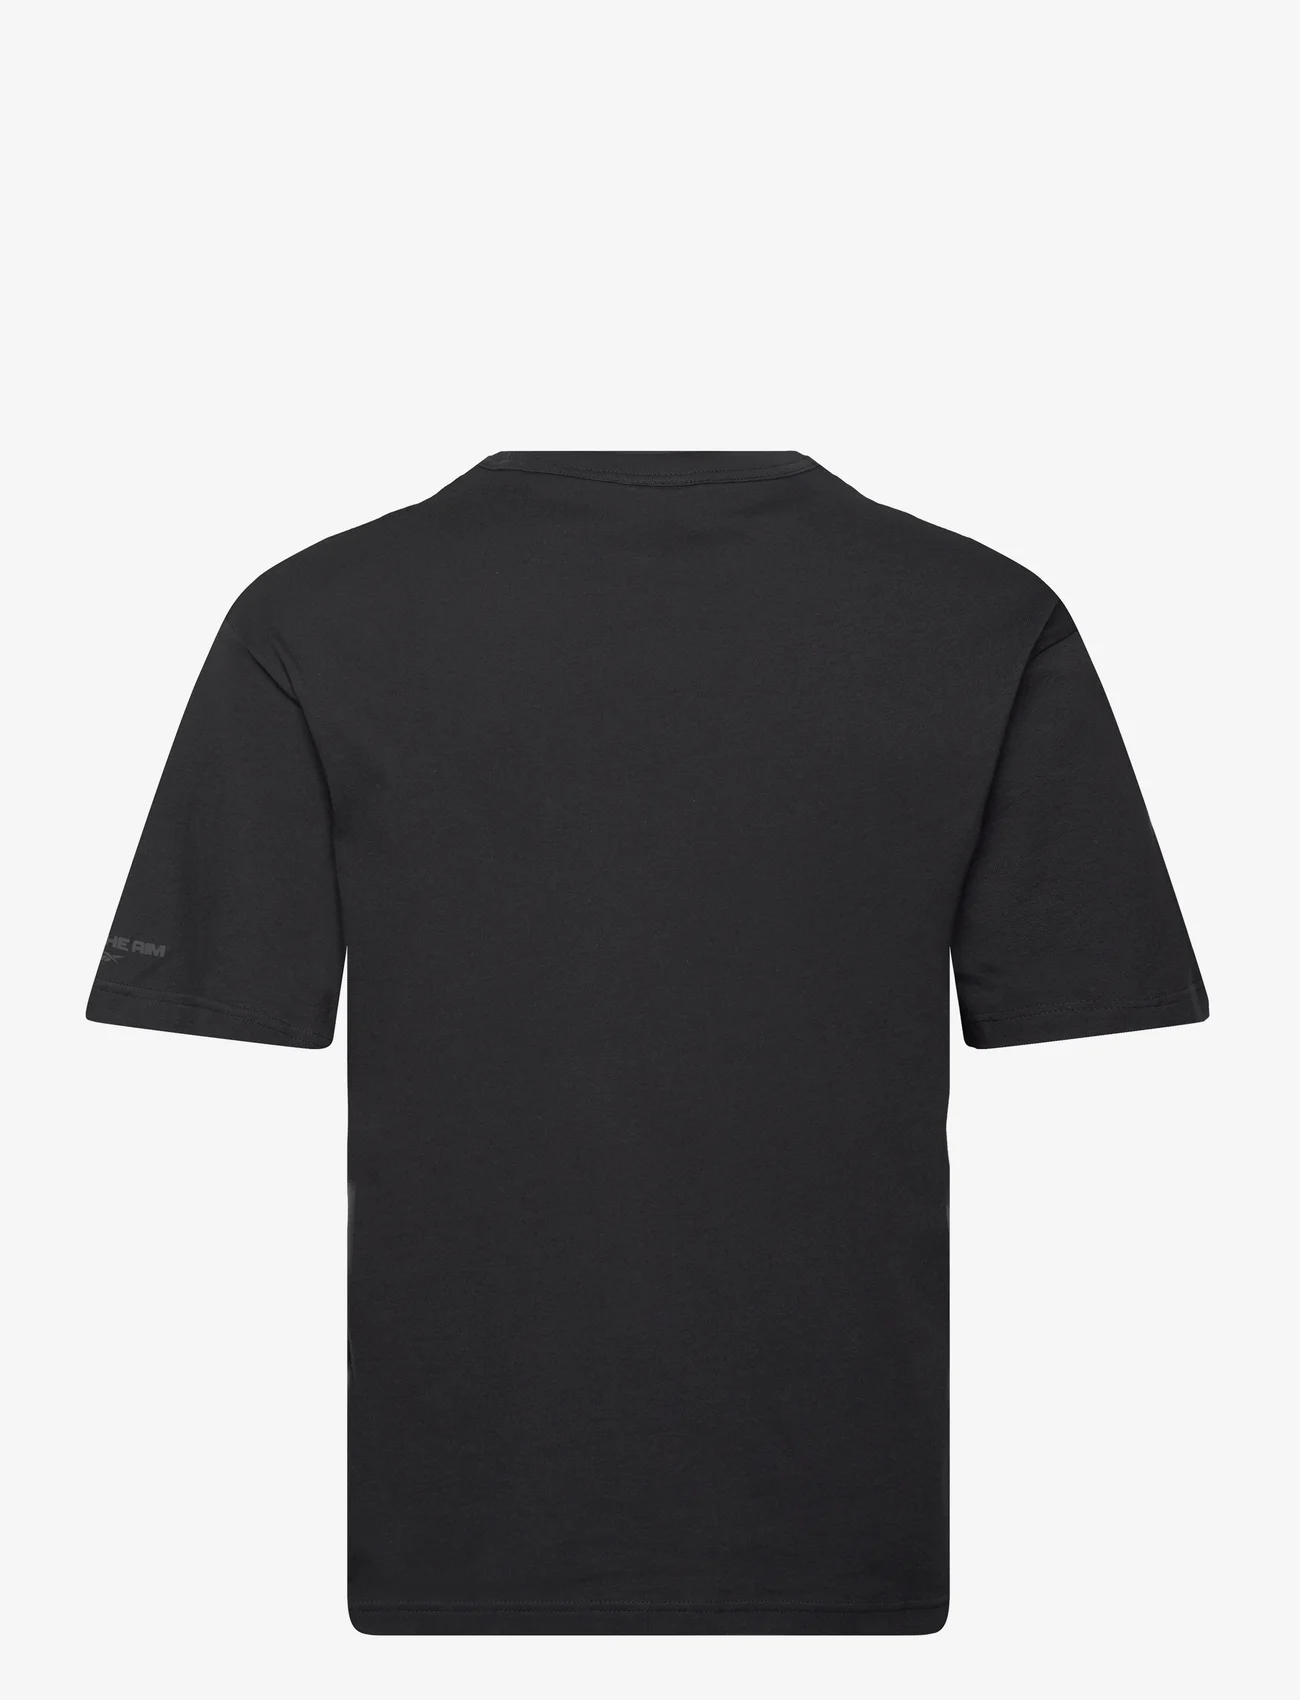 Reebok Classics - BB ATR GRAPHIC TEE - short-sleeved t-shirts - black - 1